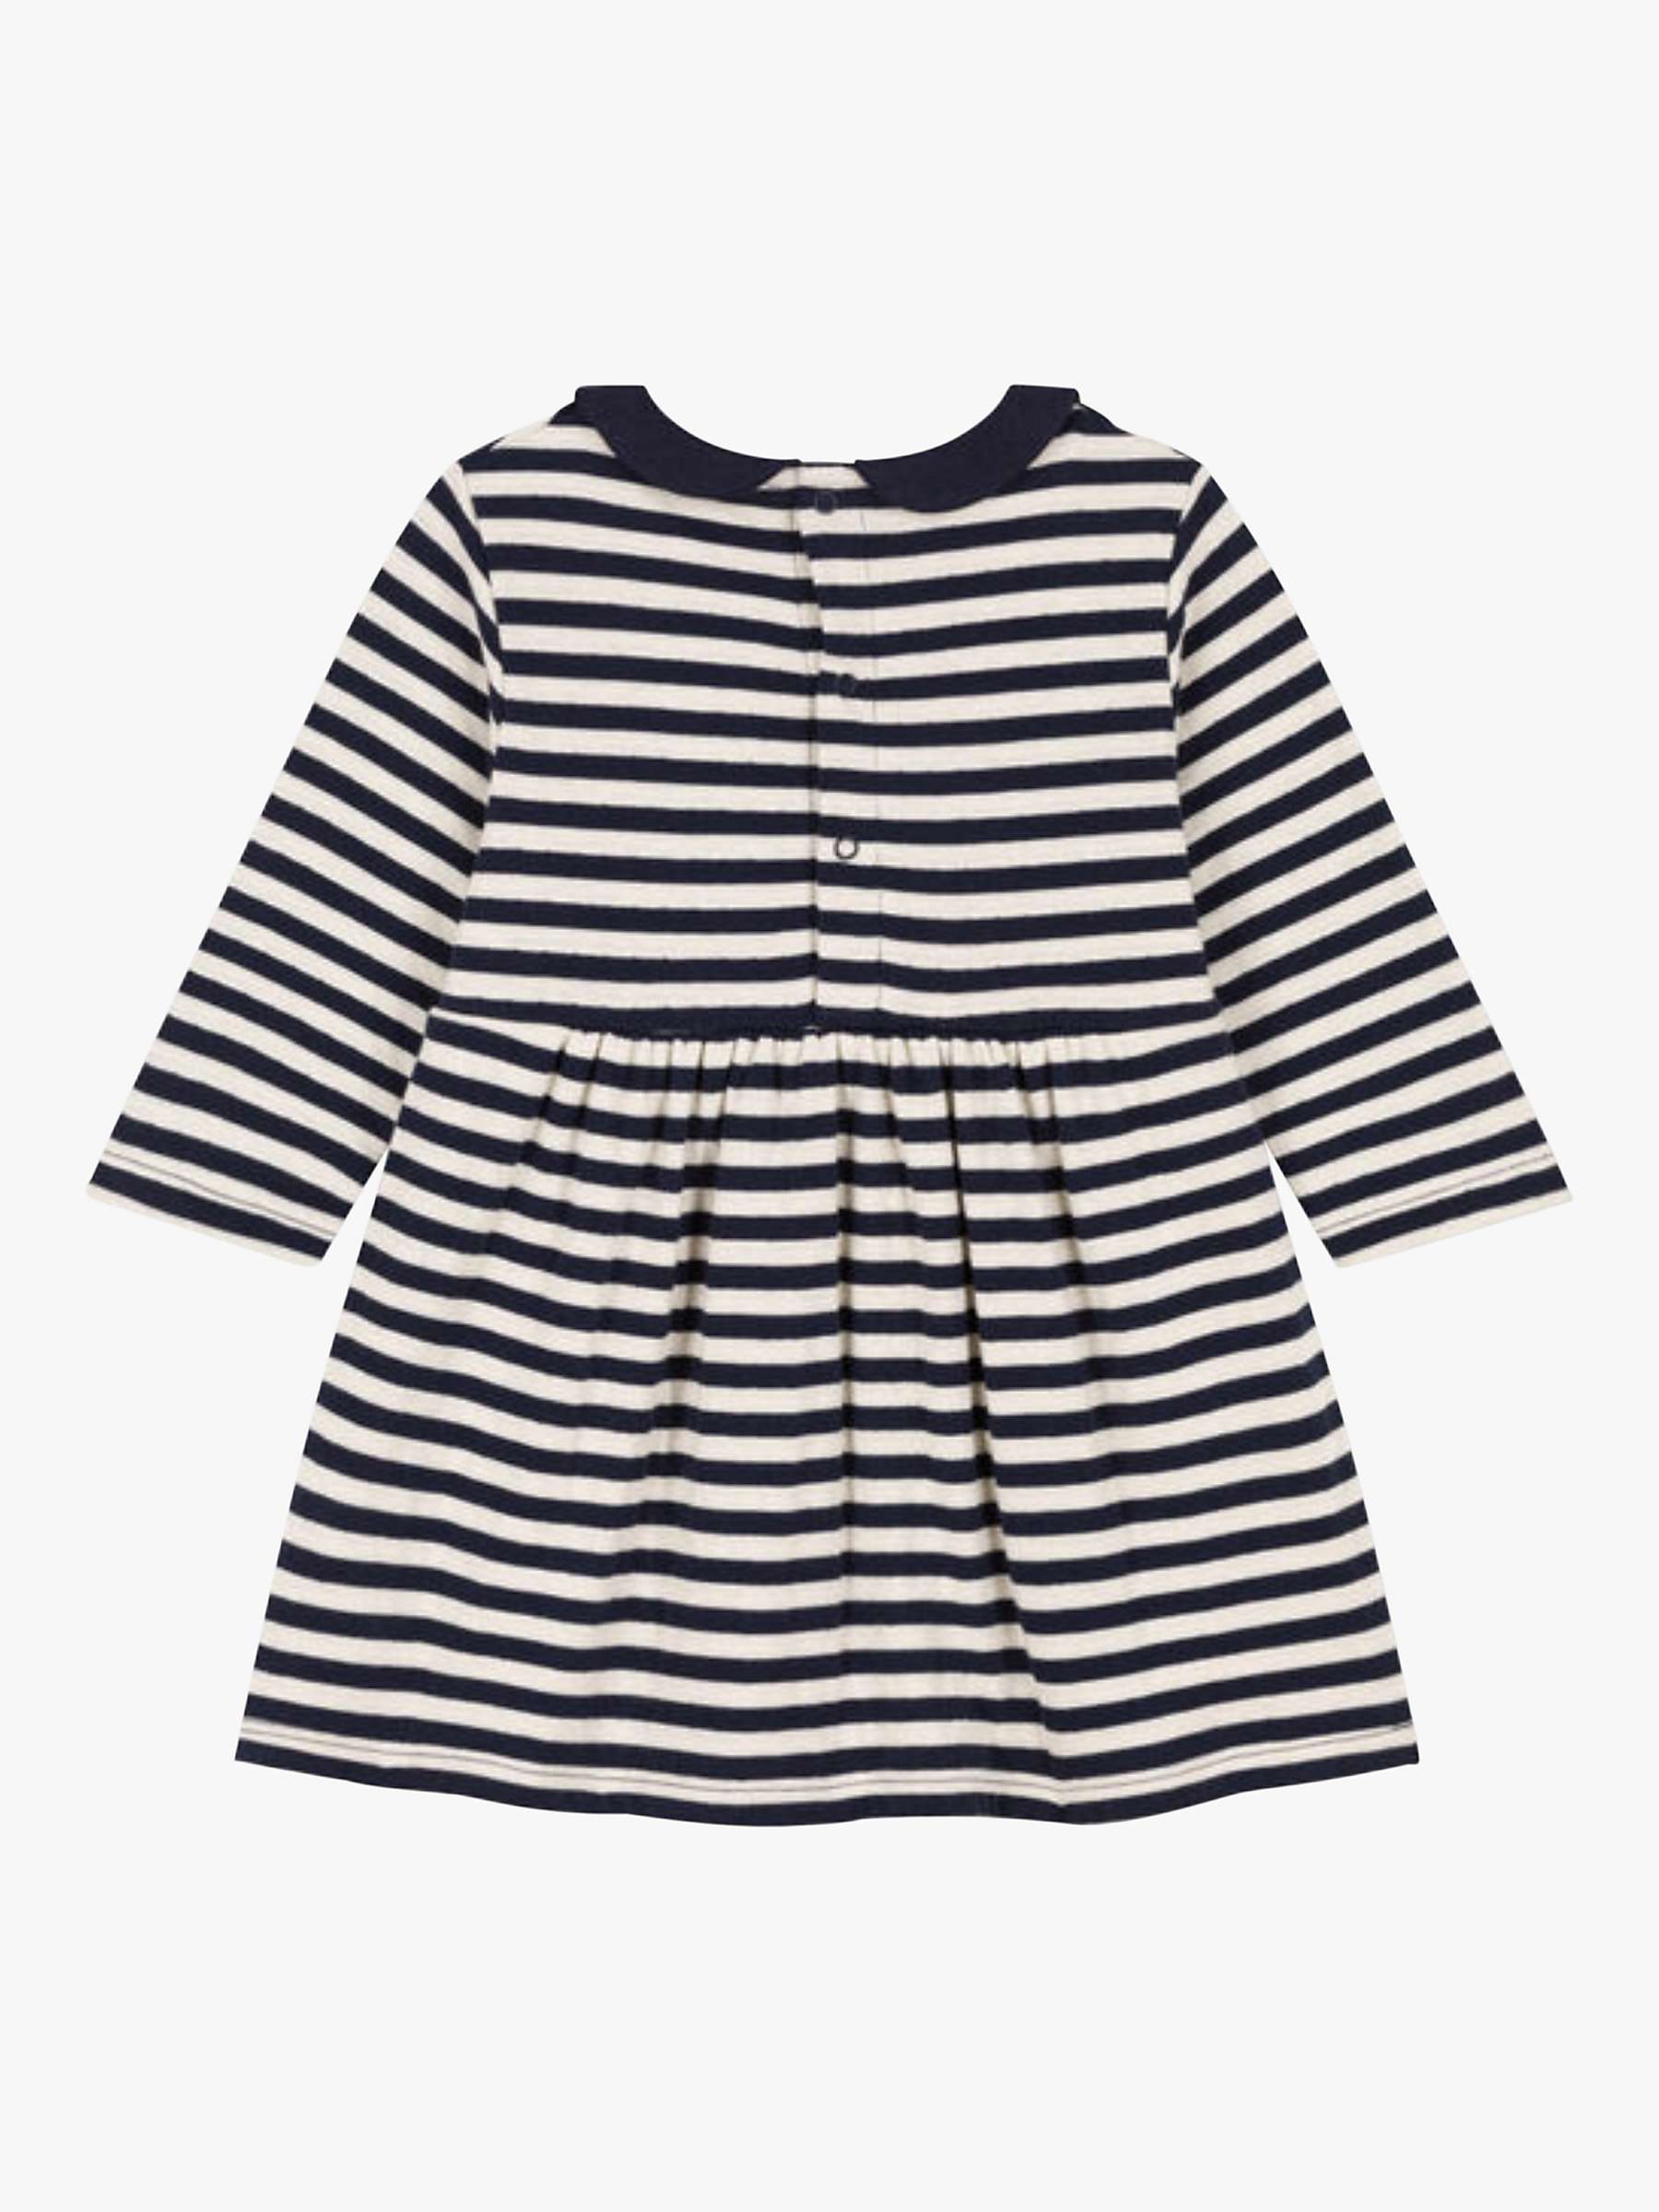 Buy Petit Bateau Baby Stripe Knit Dress, Smoking/Avalanche Online at johnlewis.com